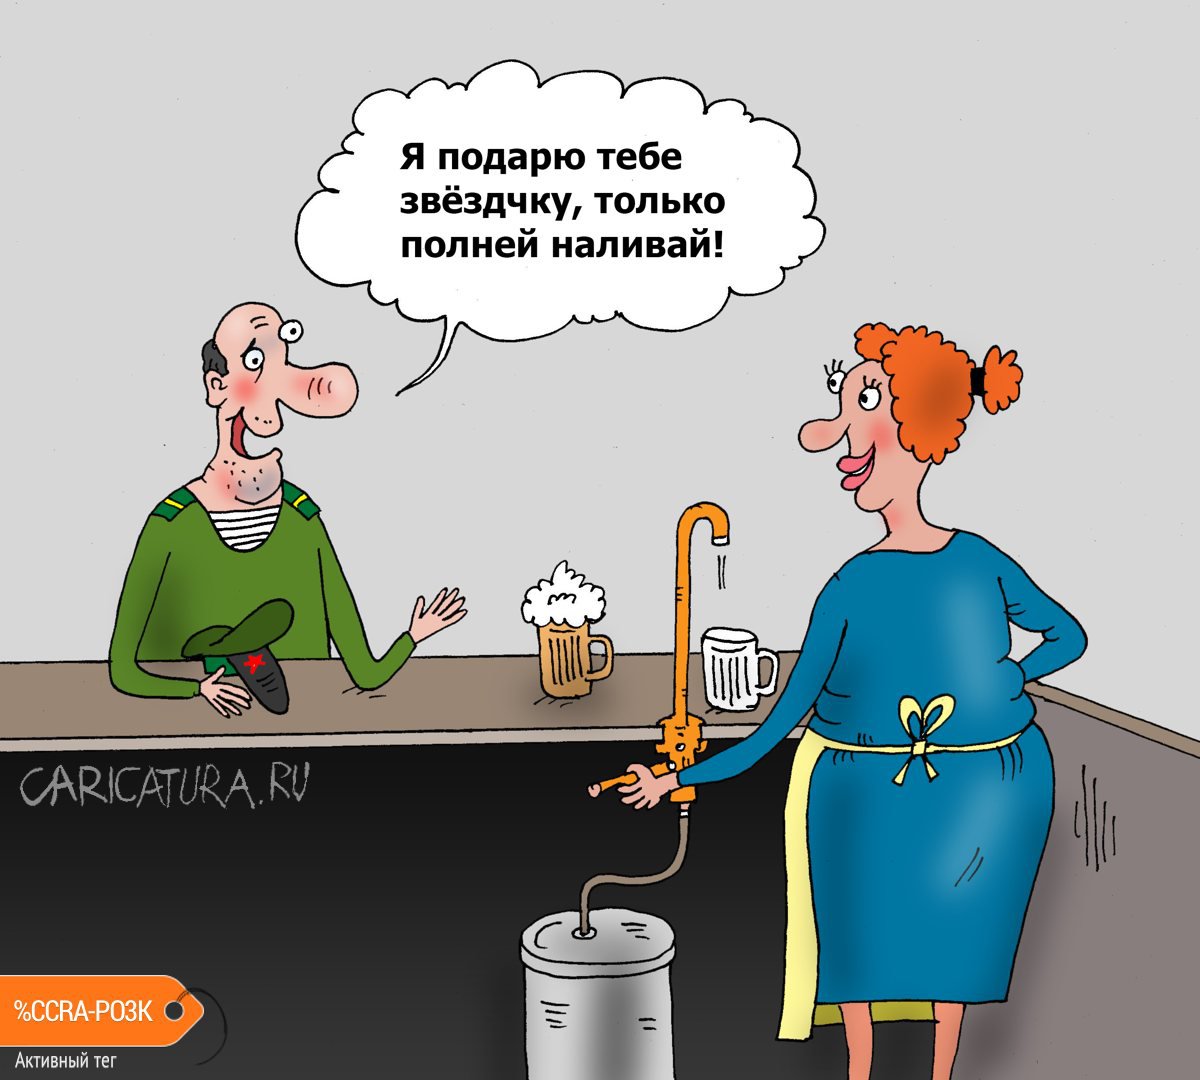 Карикатура "Дедушка сегодня в баре", Валерий Тарасенко